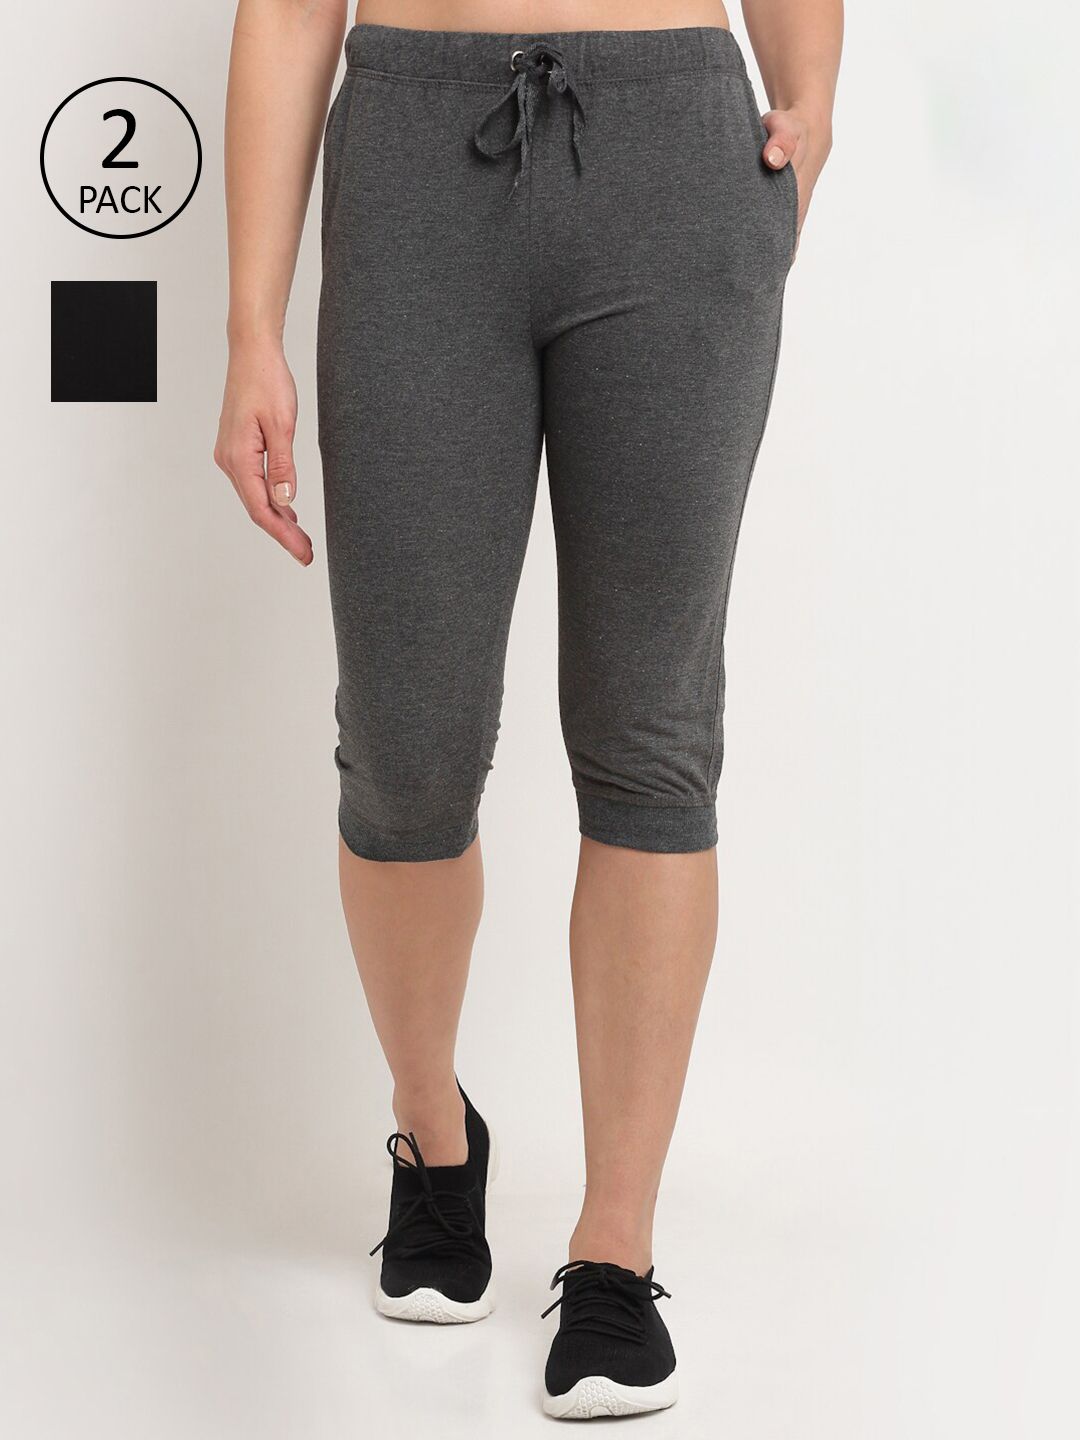 VIMAL JONNEY Women Grey & Black Set Of 2 Capris Track Pants Price in India